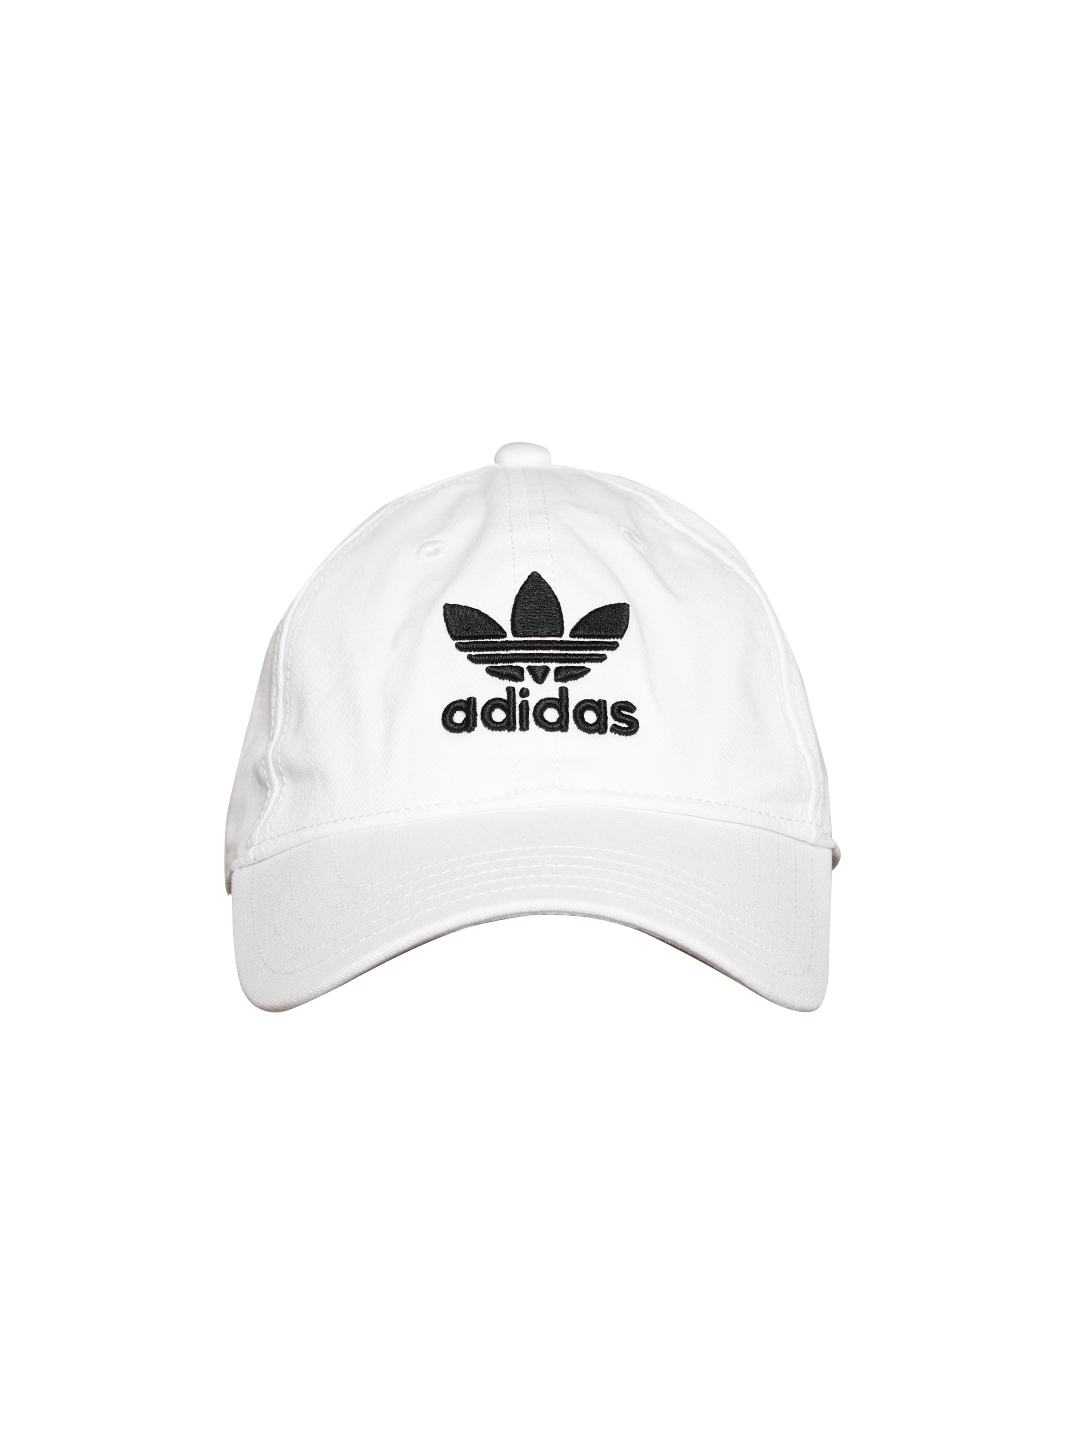 off white adidas hat